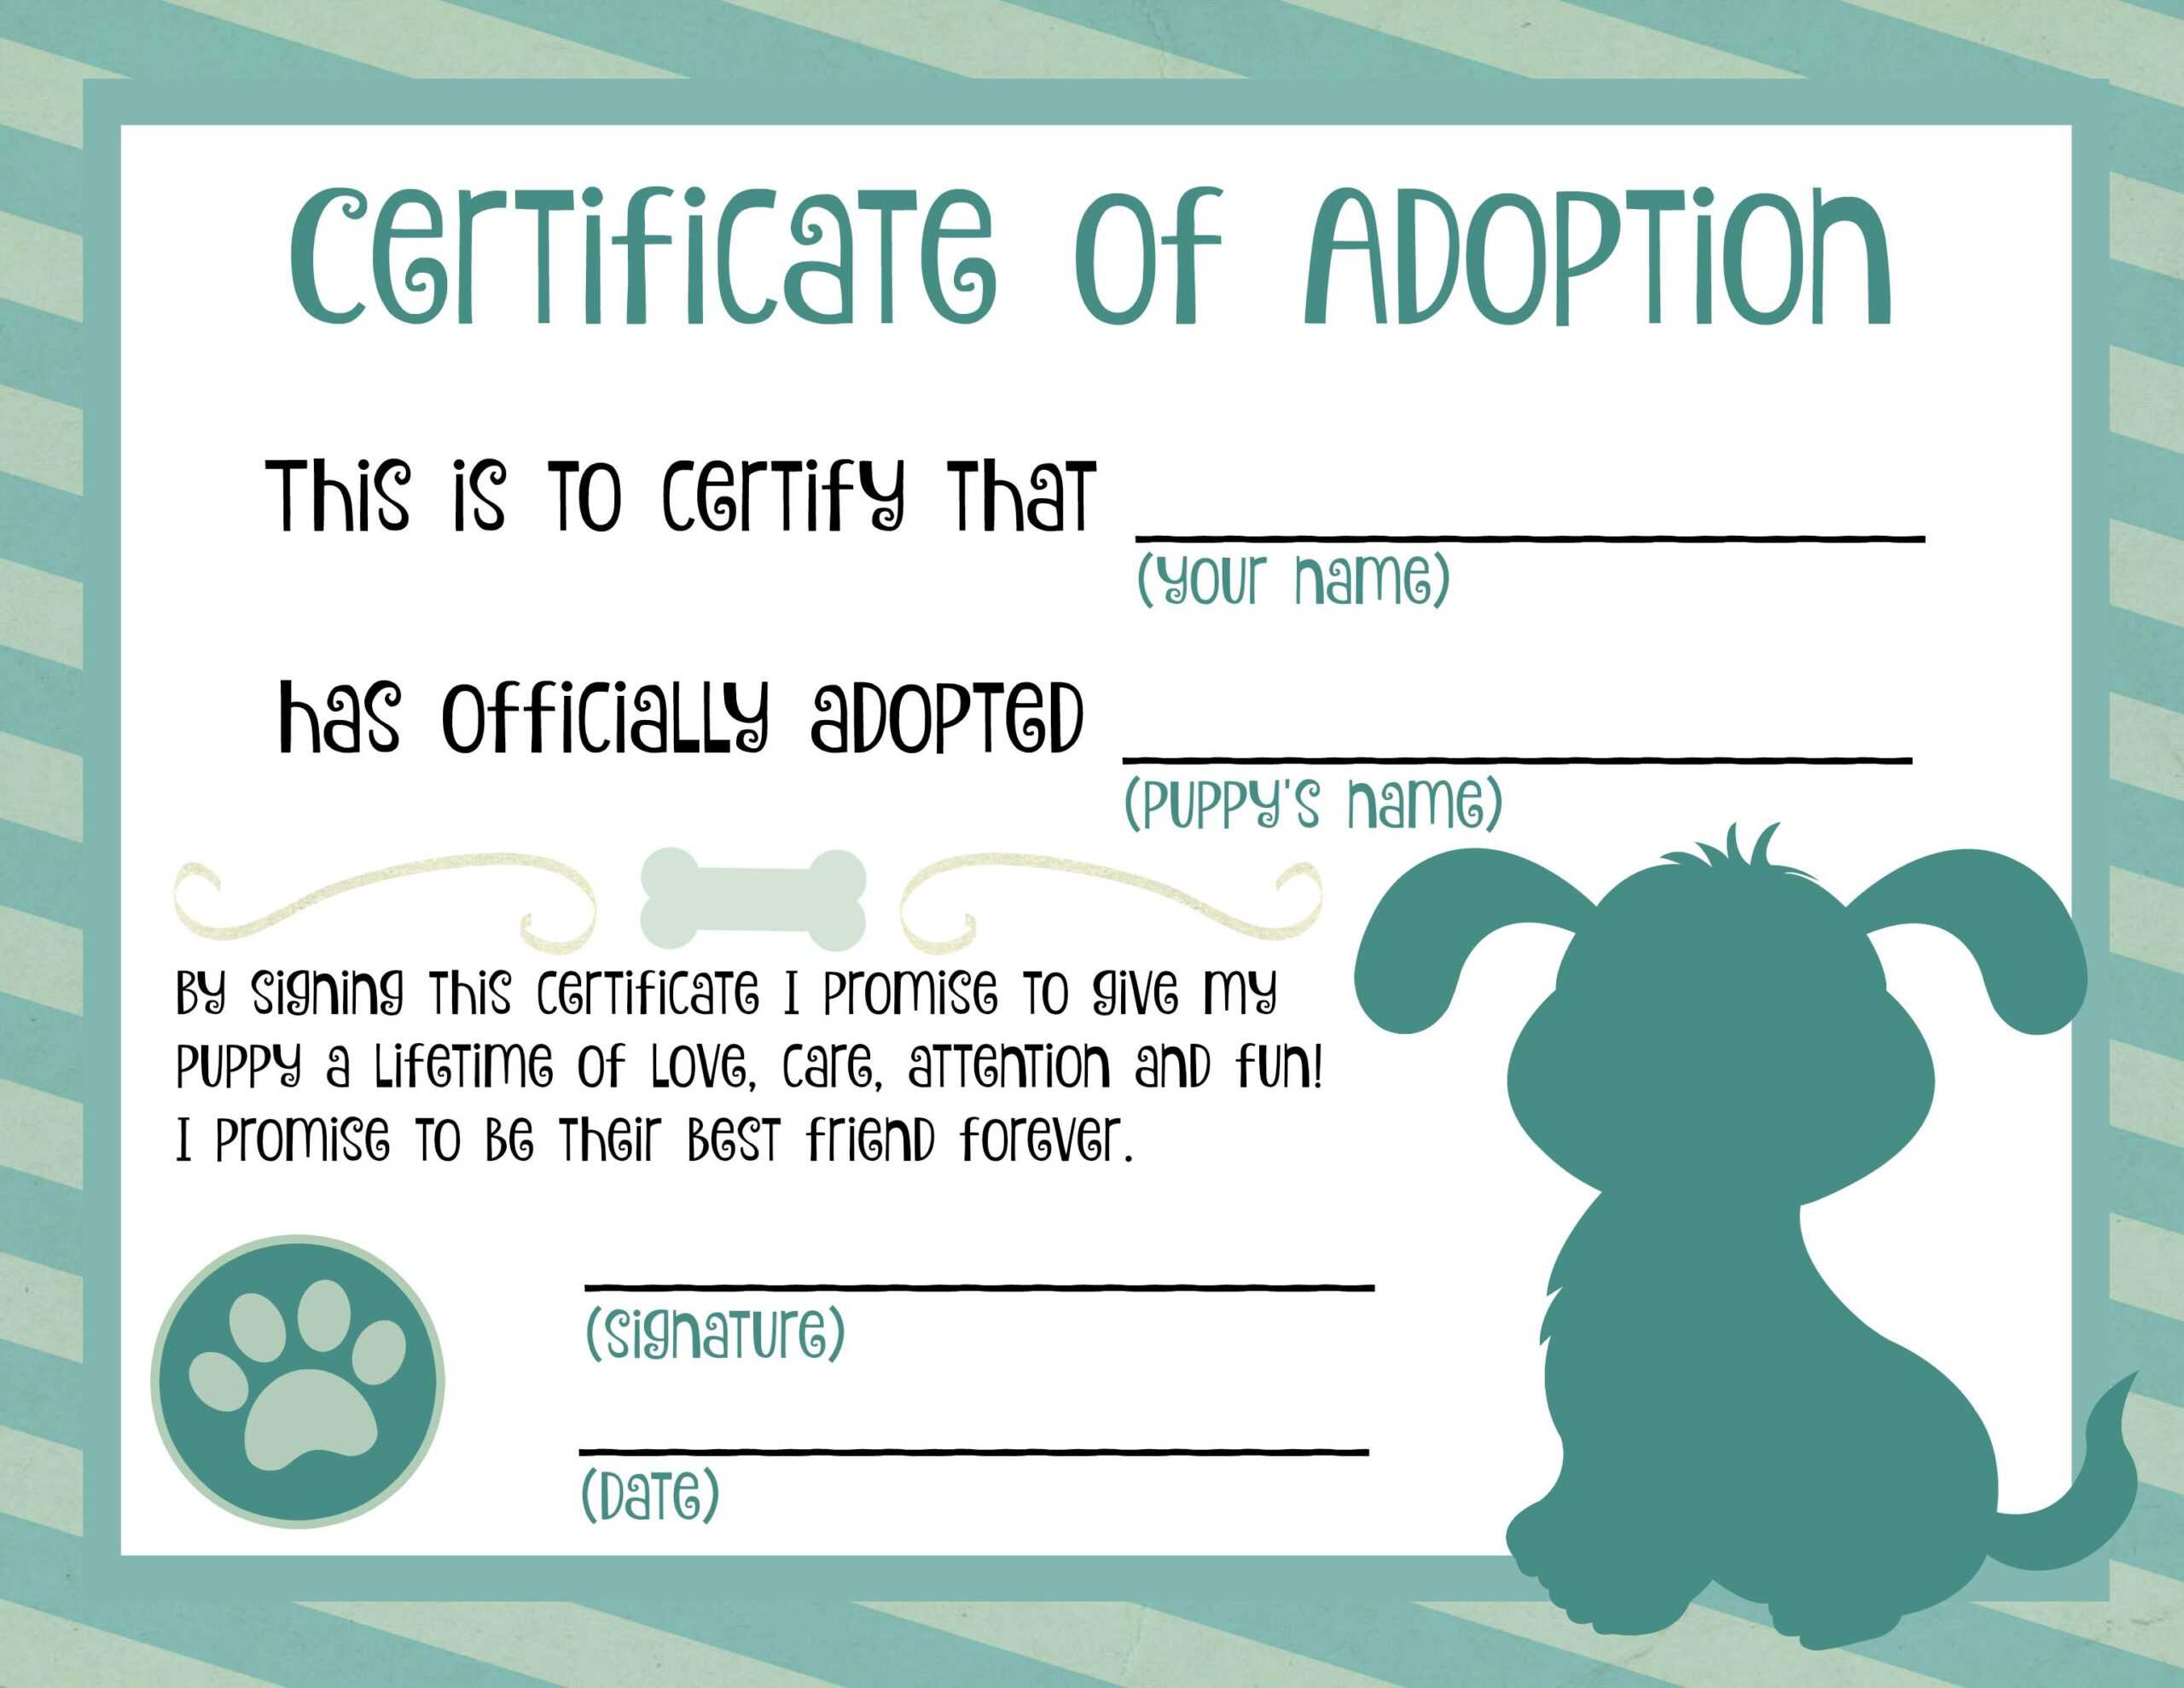 Puppy Adoption Certificate In 2019 | Adoption Certificate Intended For Pet Adoption Certificate Template